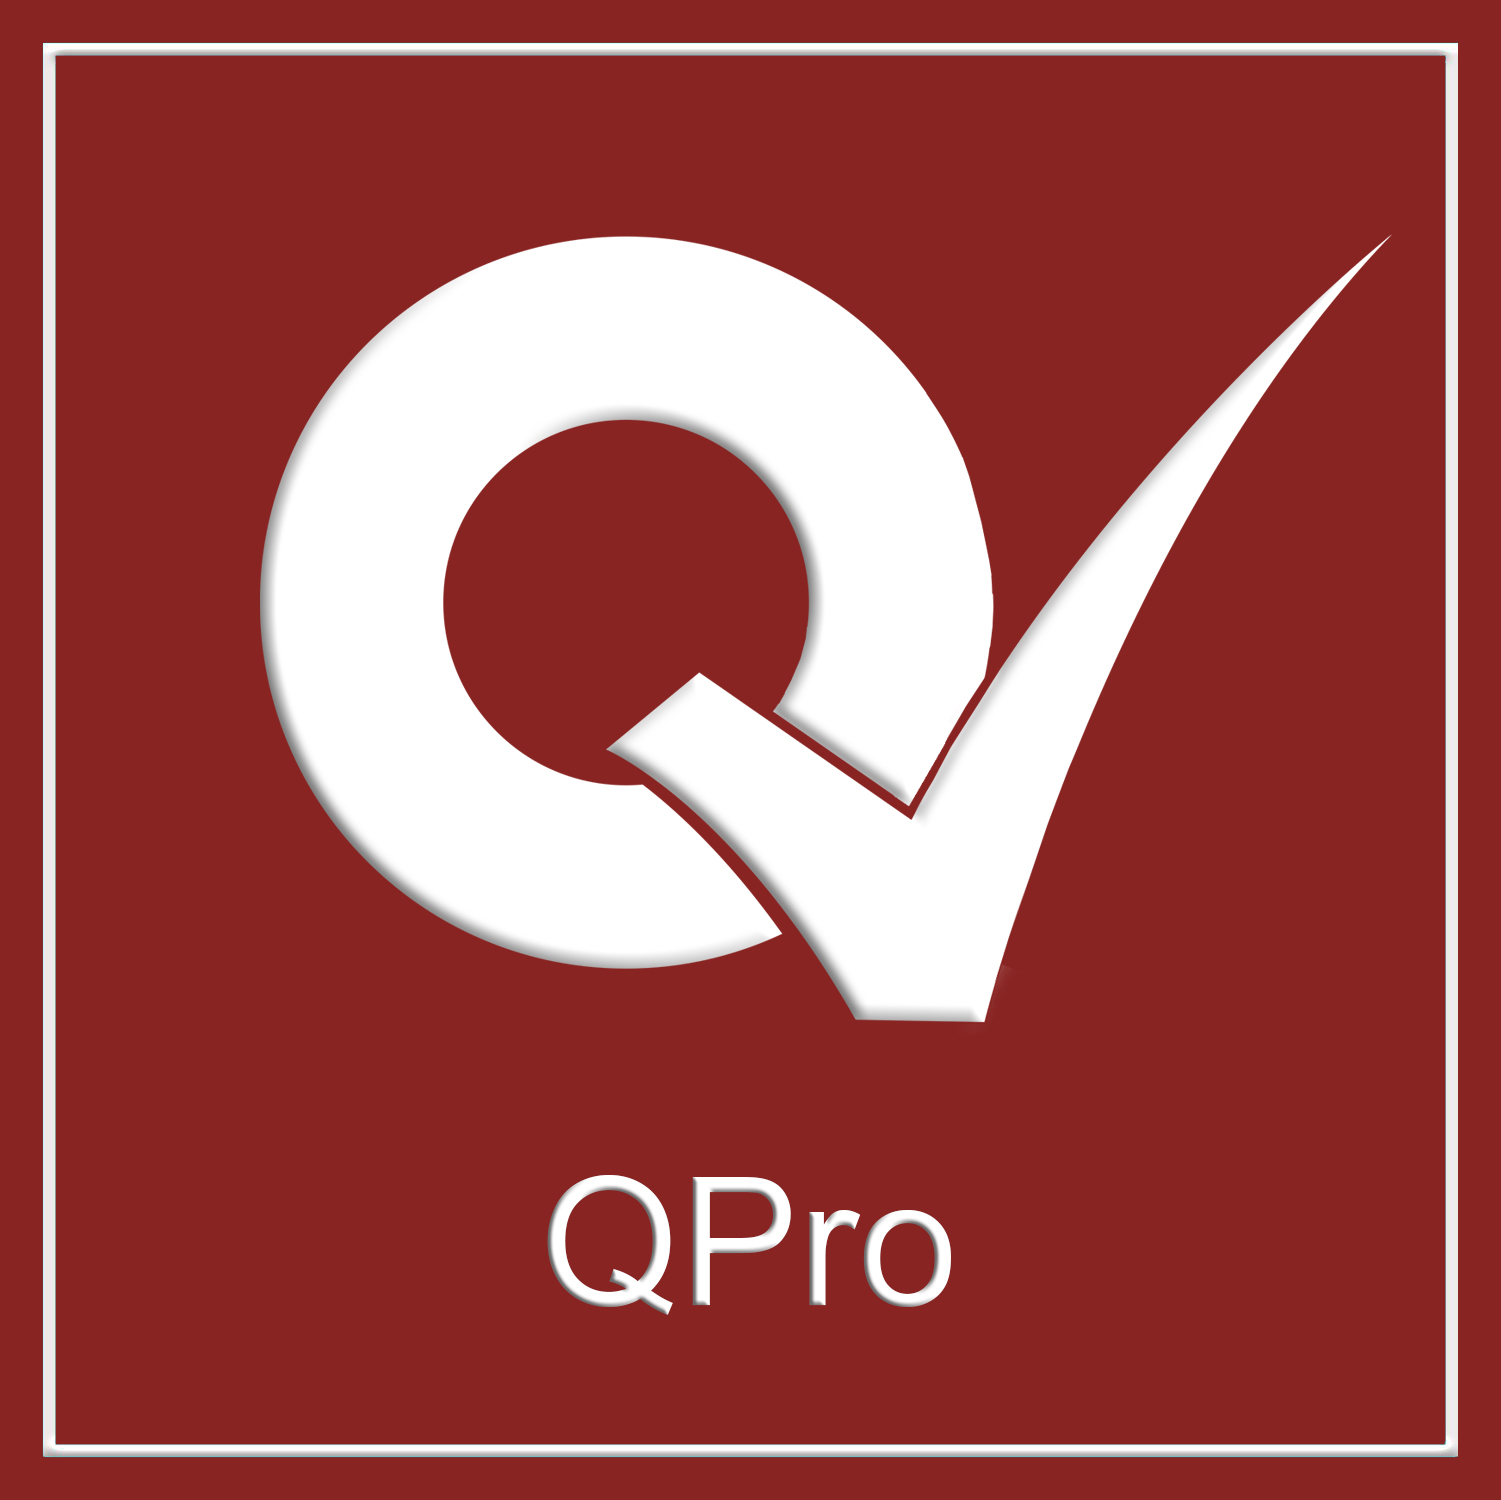 QPro.com logo - Certifications for medical coding